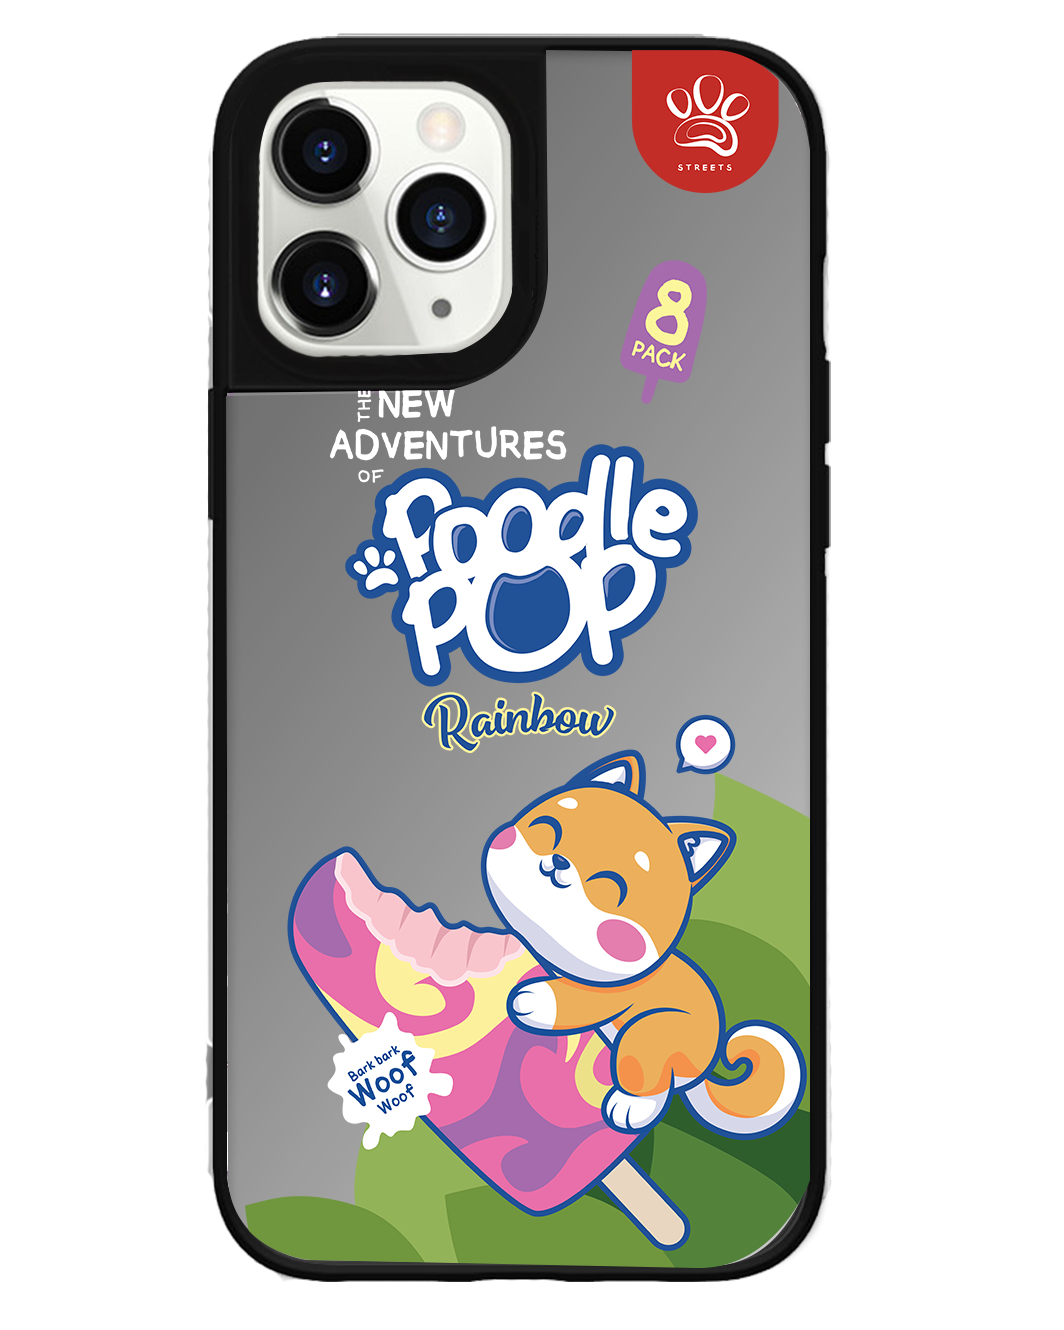 iPhone Mirror Grip Case - Poodle Pop